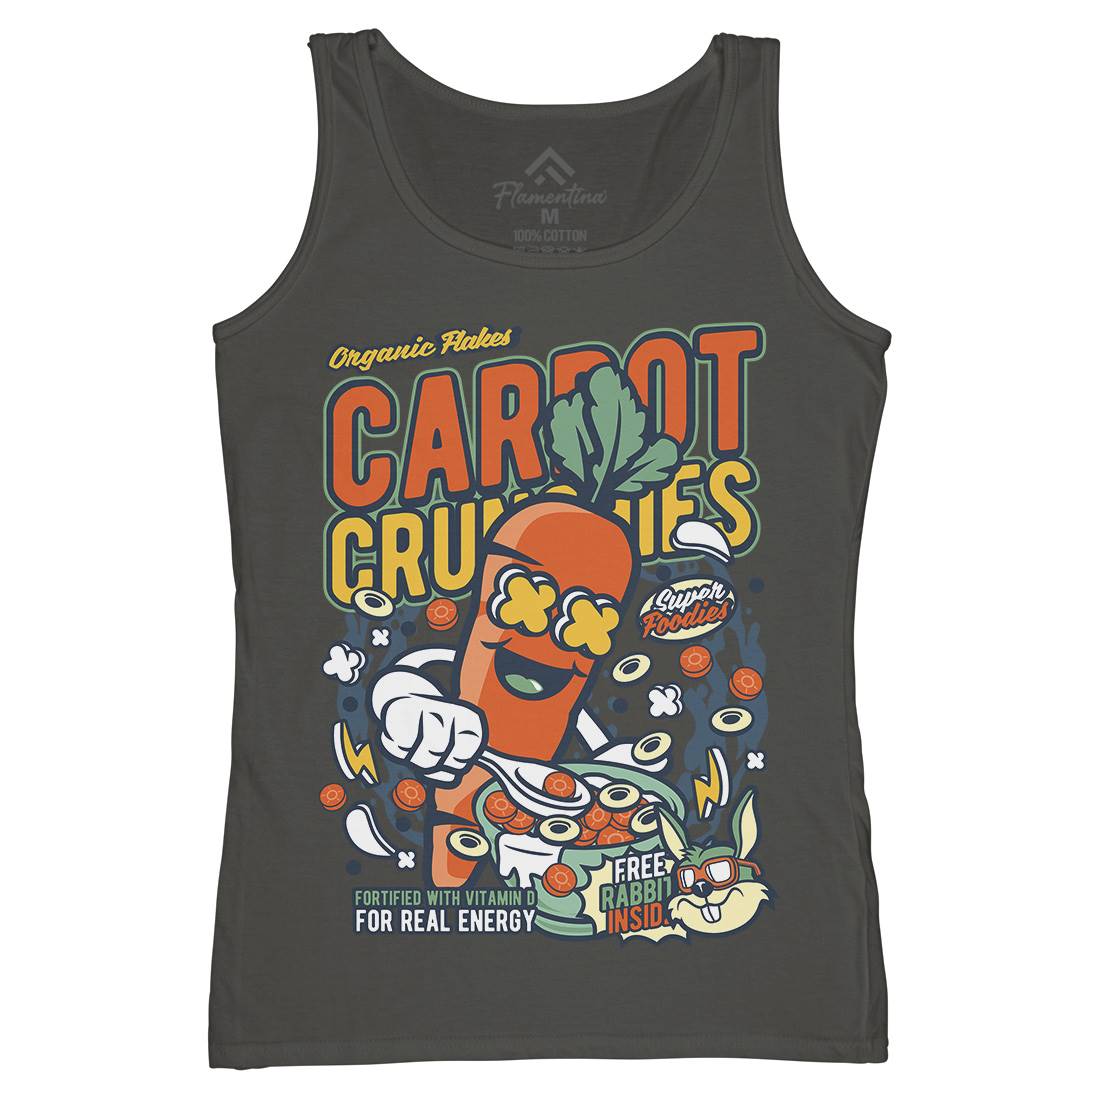 Carrot Crunchies Womens Organic Tank Top Vest Food C509